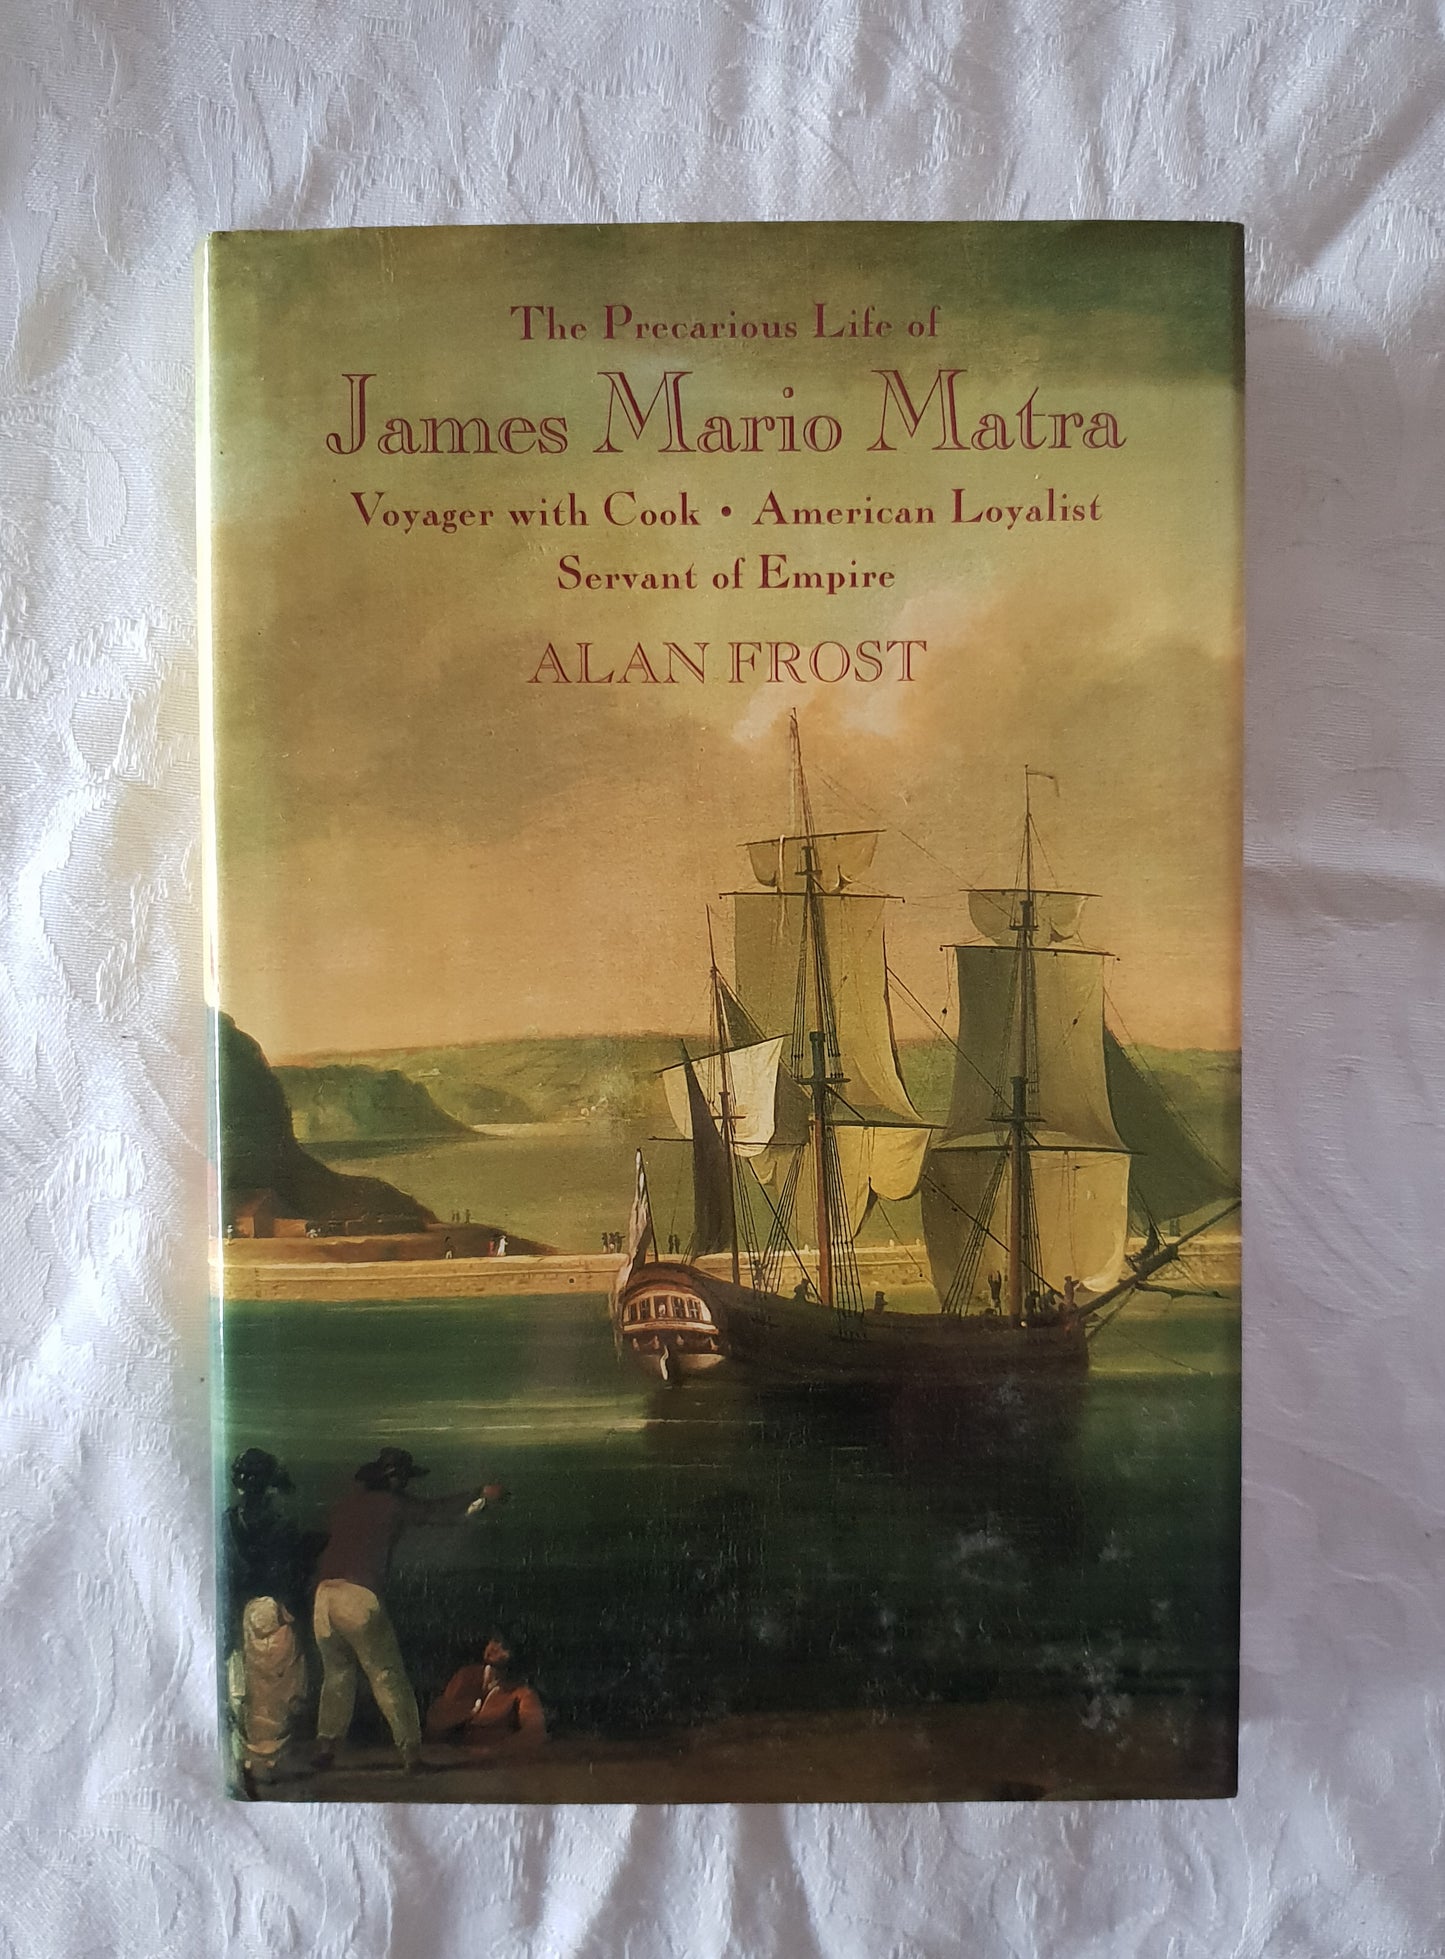 The Precarious Life of James Mario Matra by Alan Frost